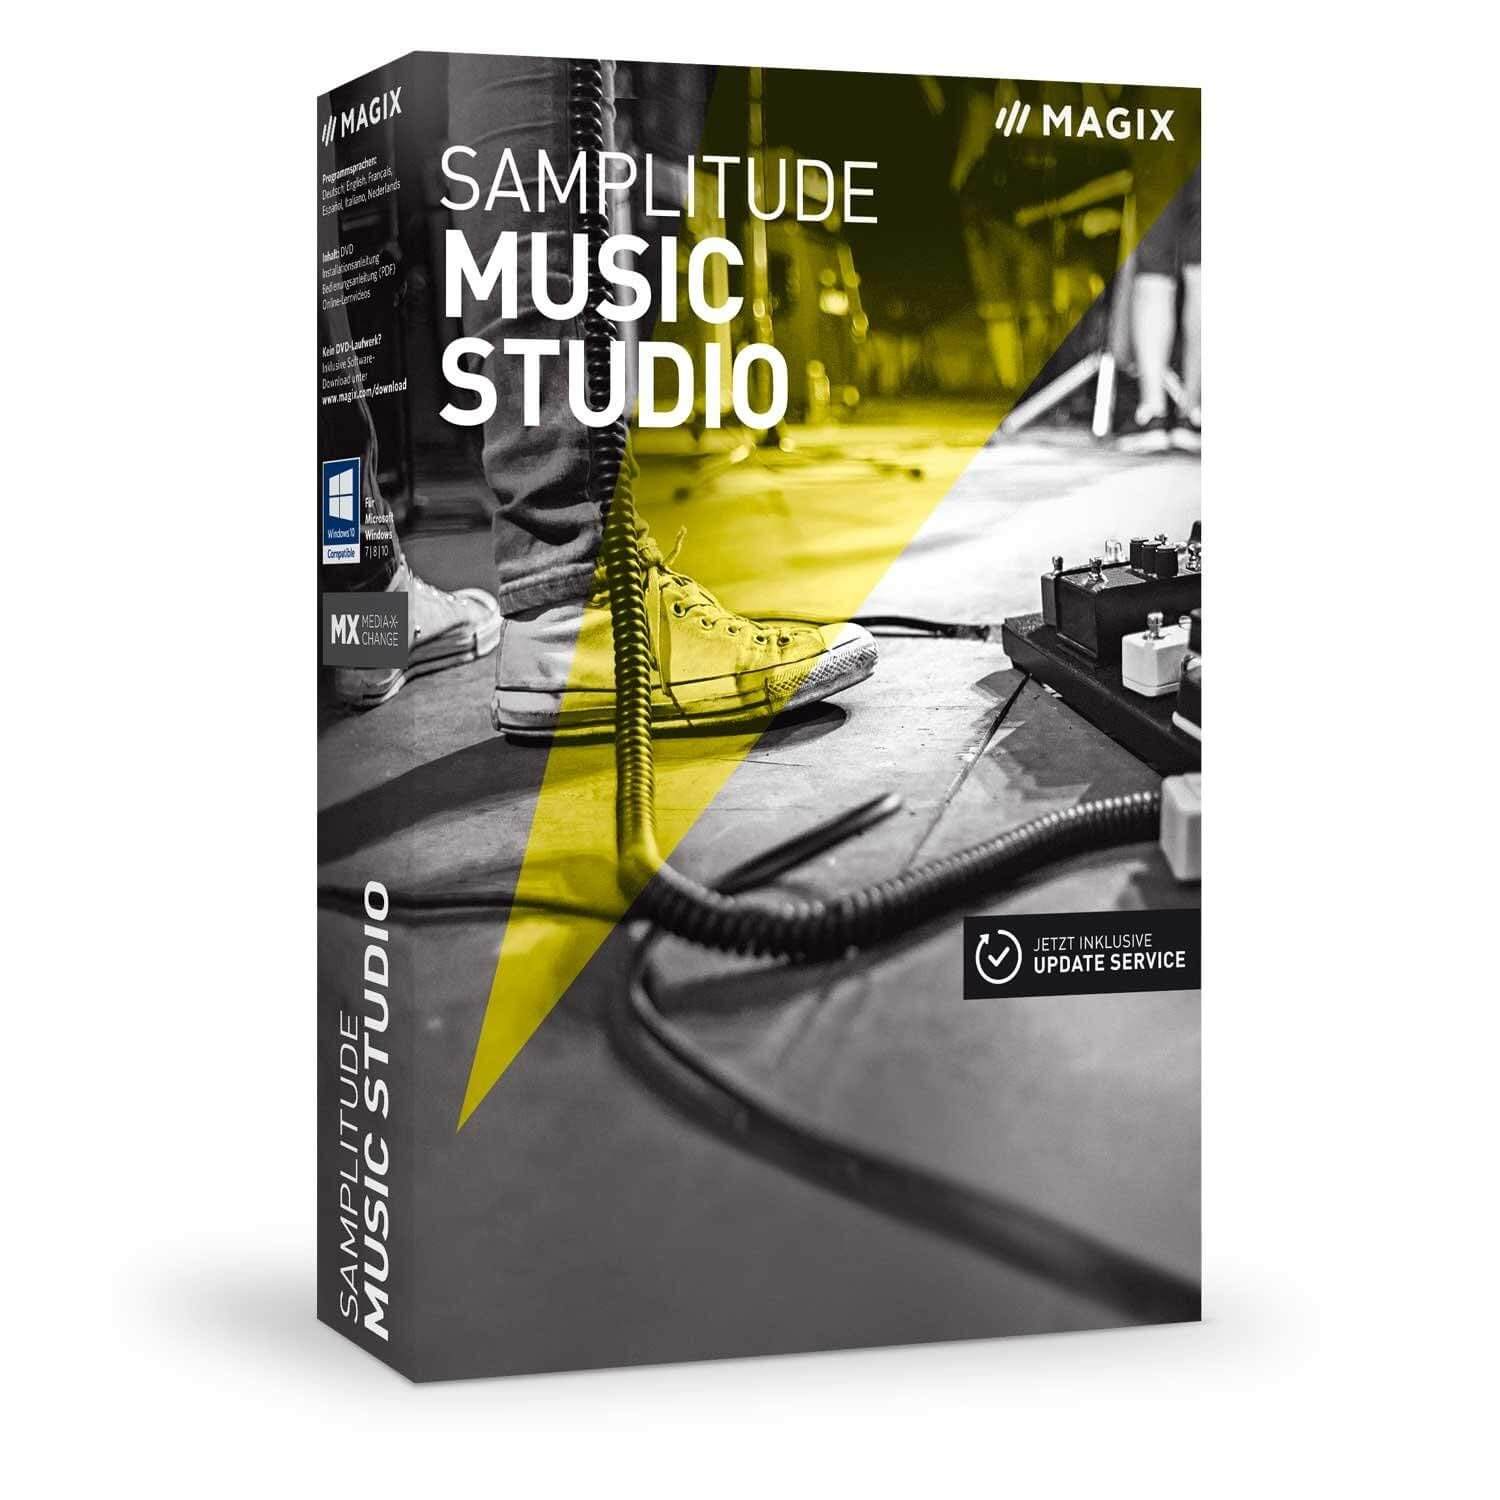 MAGIX Samplitude Music Studio - CoffeeSoft